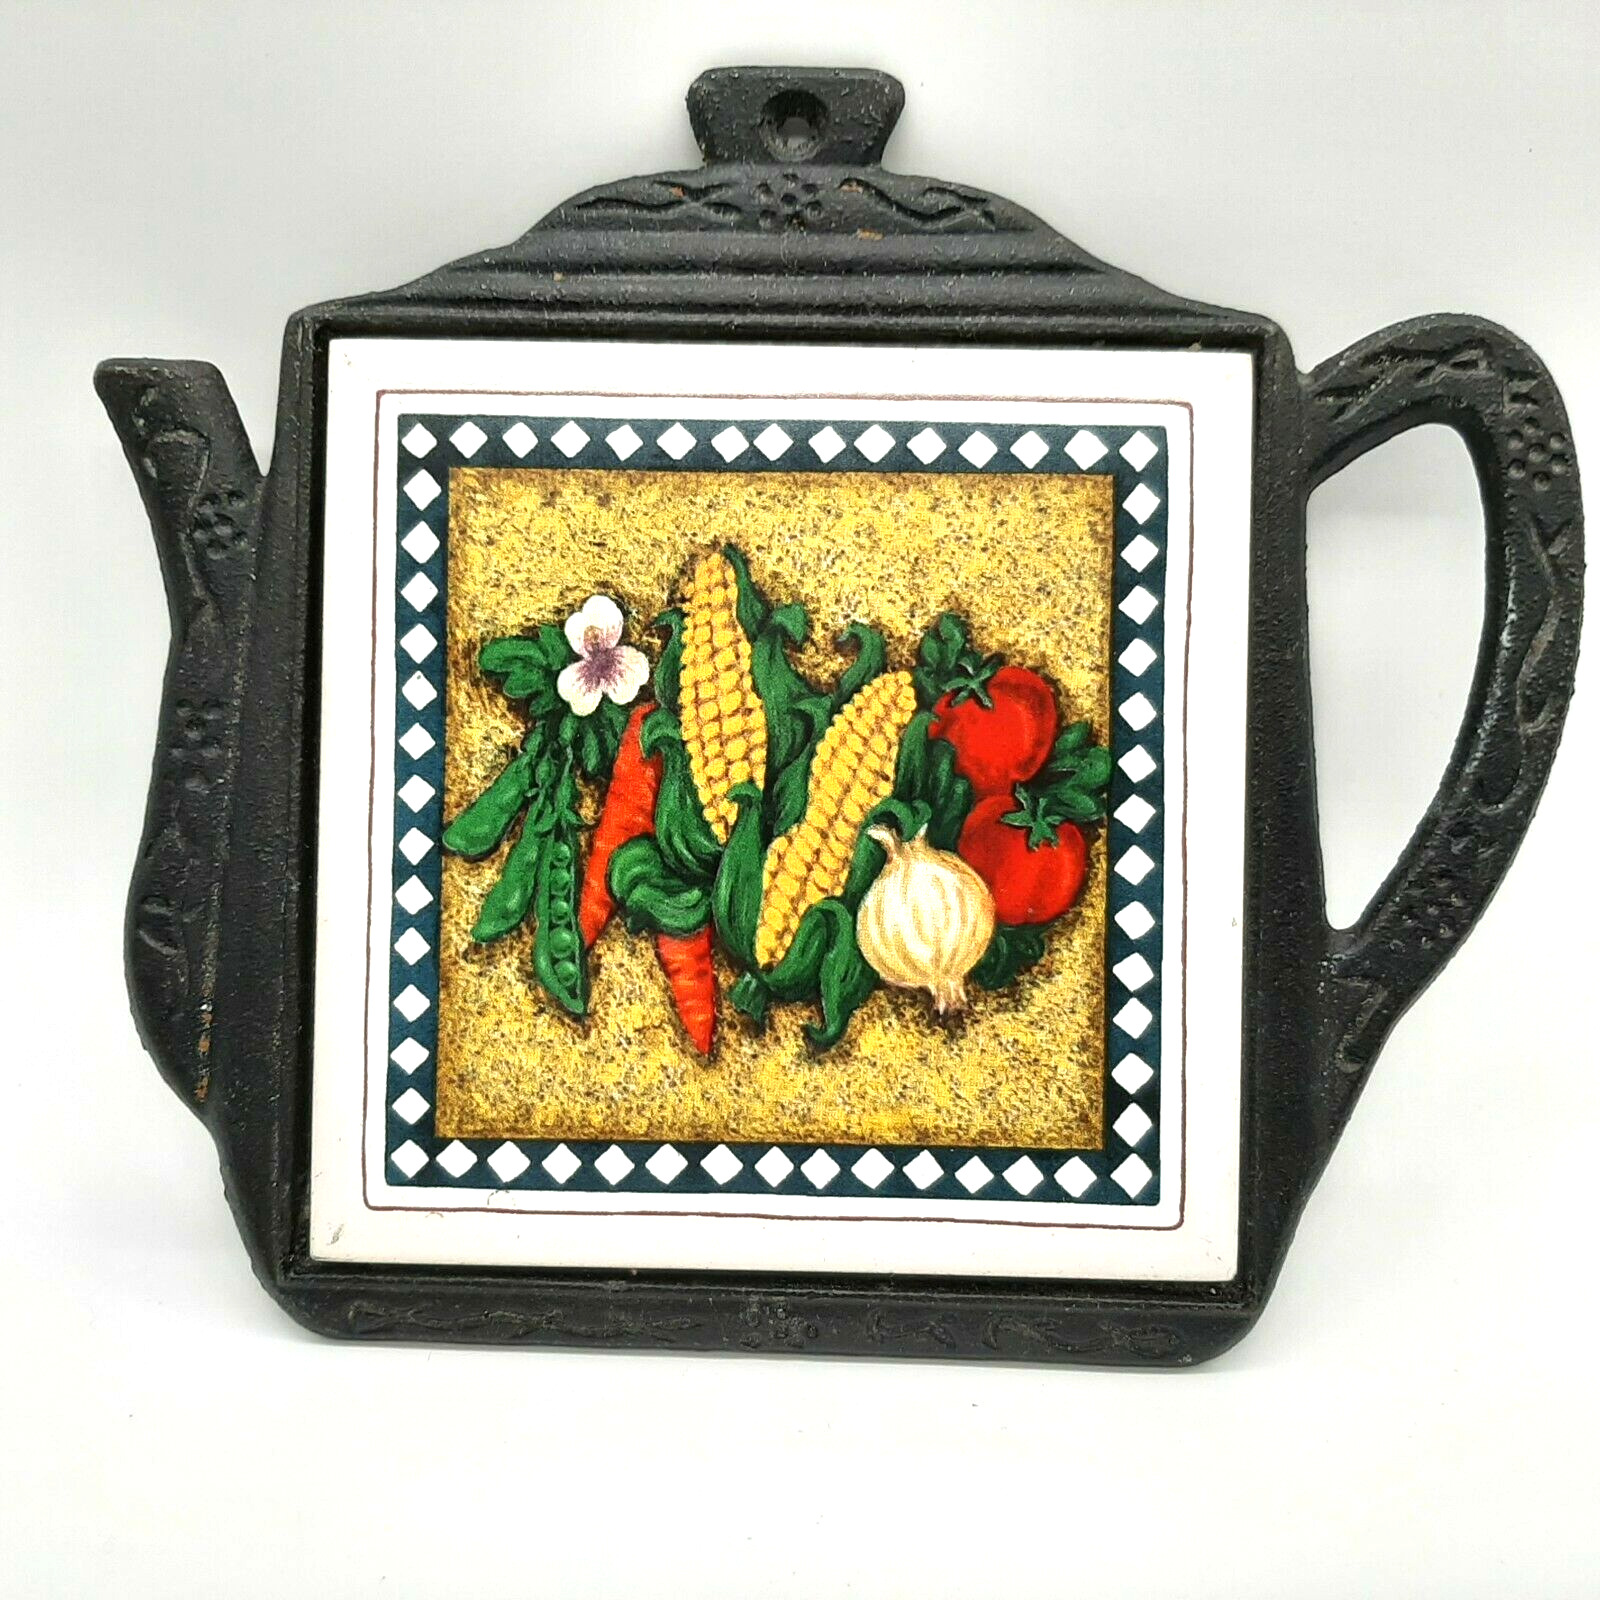 Sri Lanka Walltiles Cast Iron and Tile Teapot Trivet Vegetables 6x7 Inches